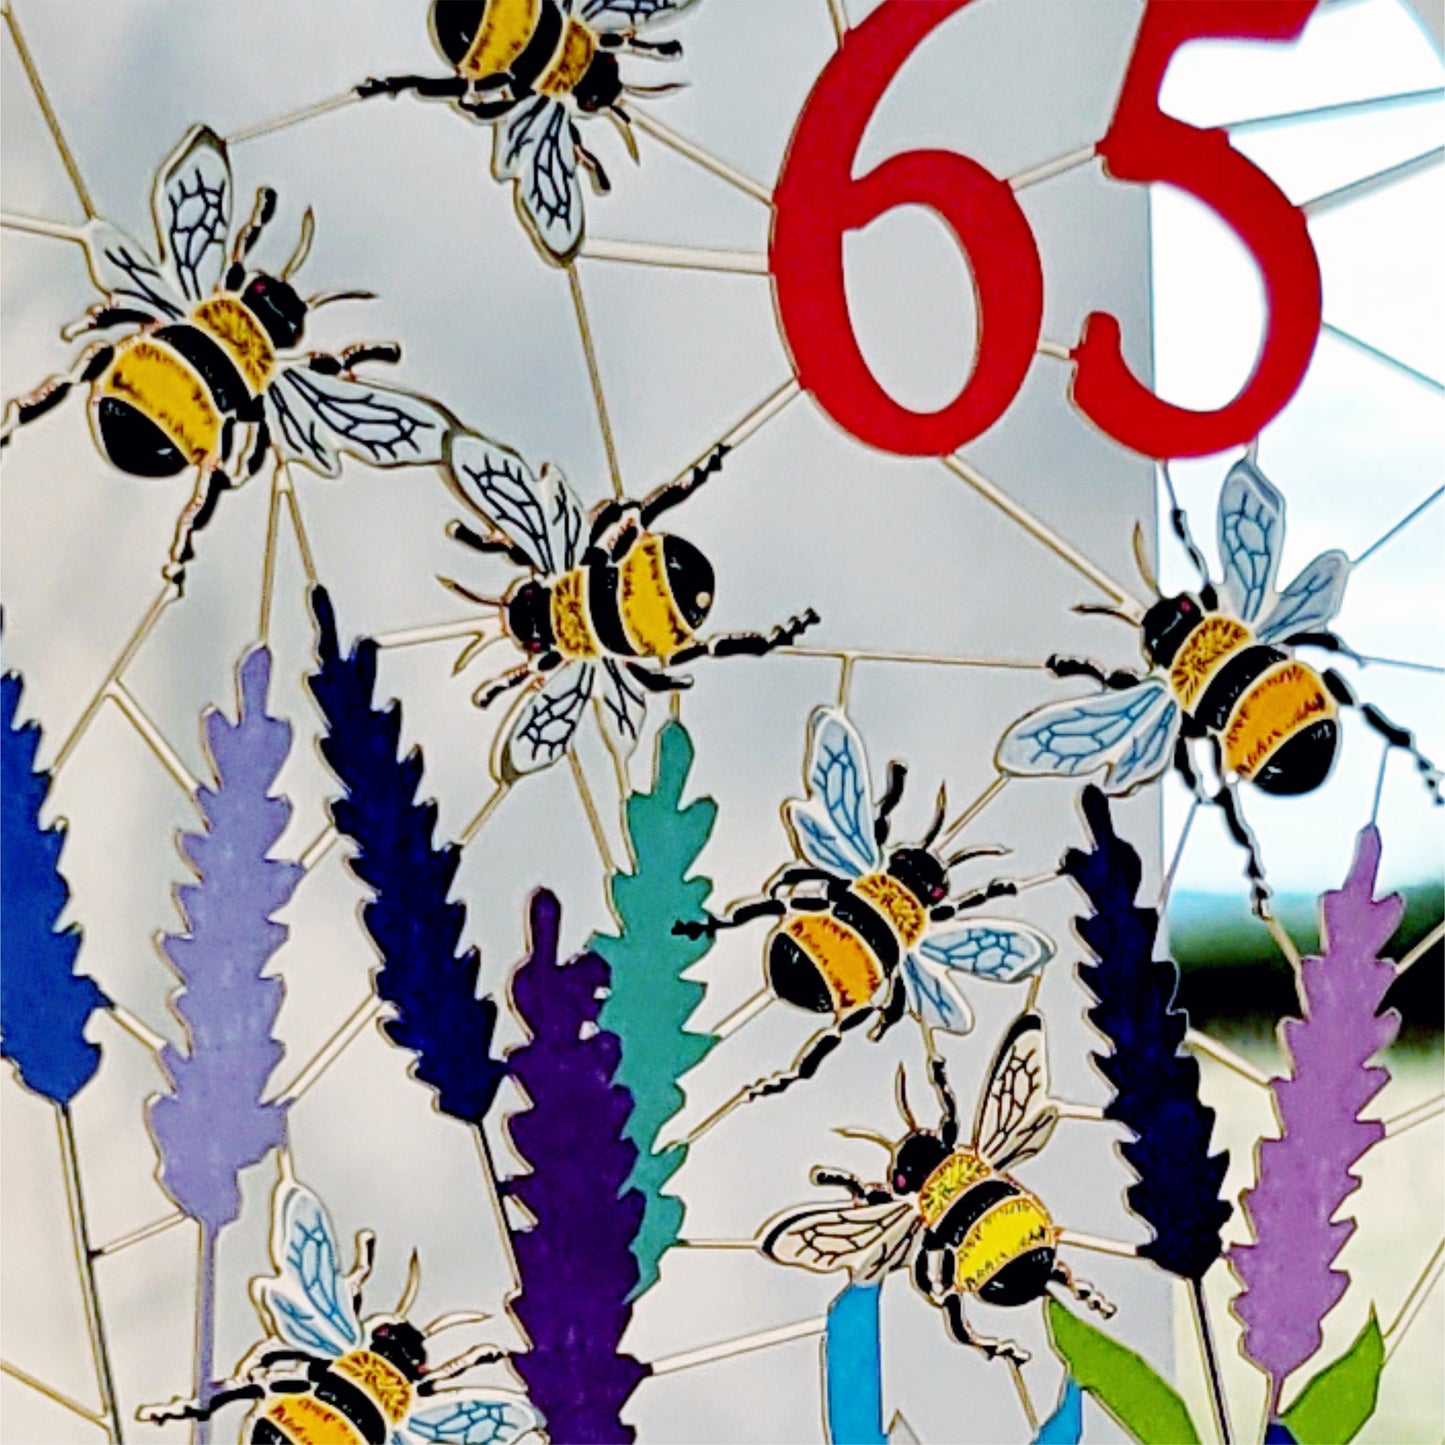 Age 65 Birthday Card, 65th Birthday Card, Bee Card - Be065